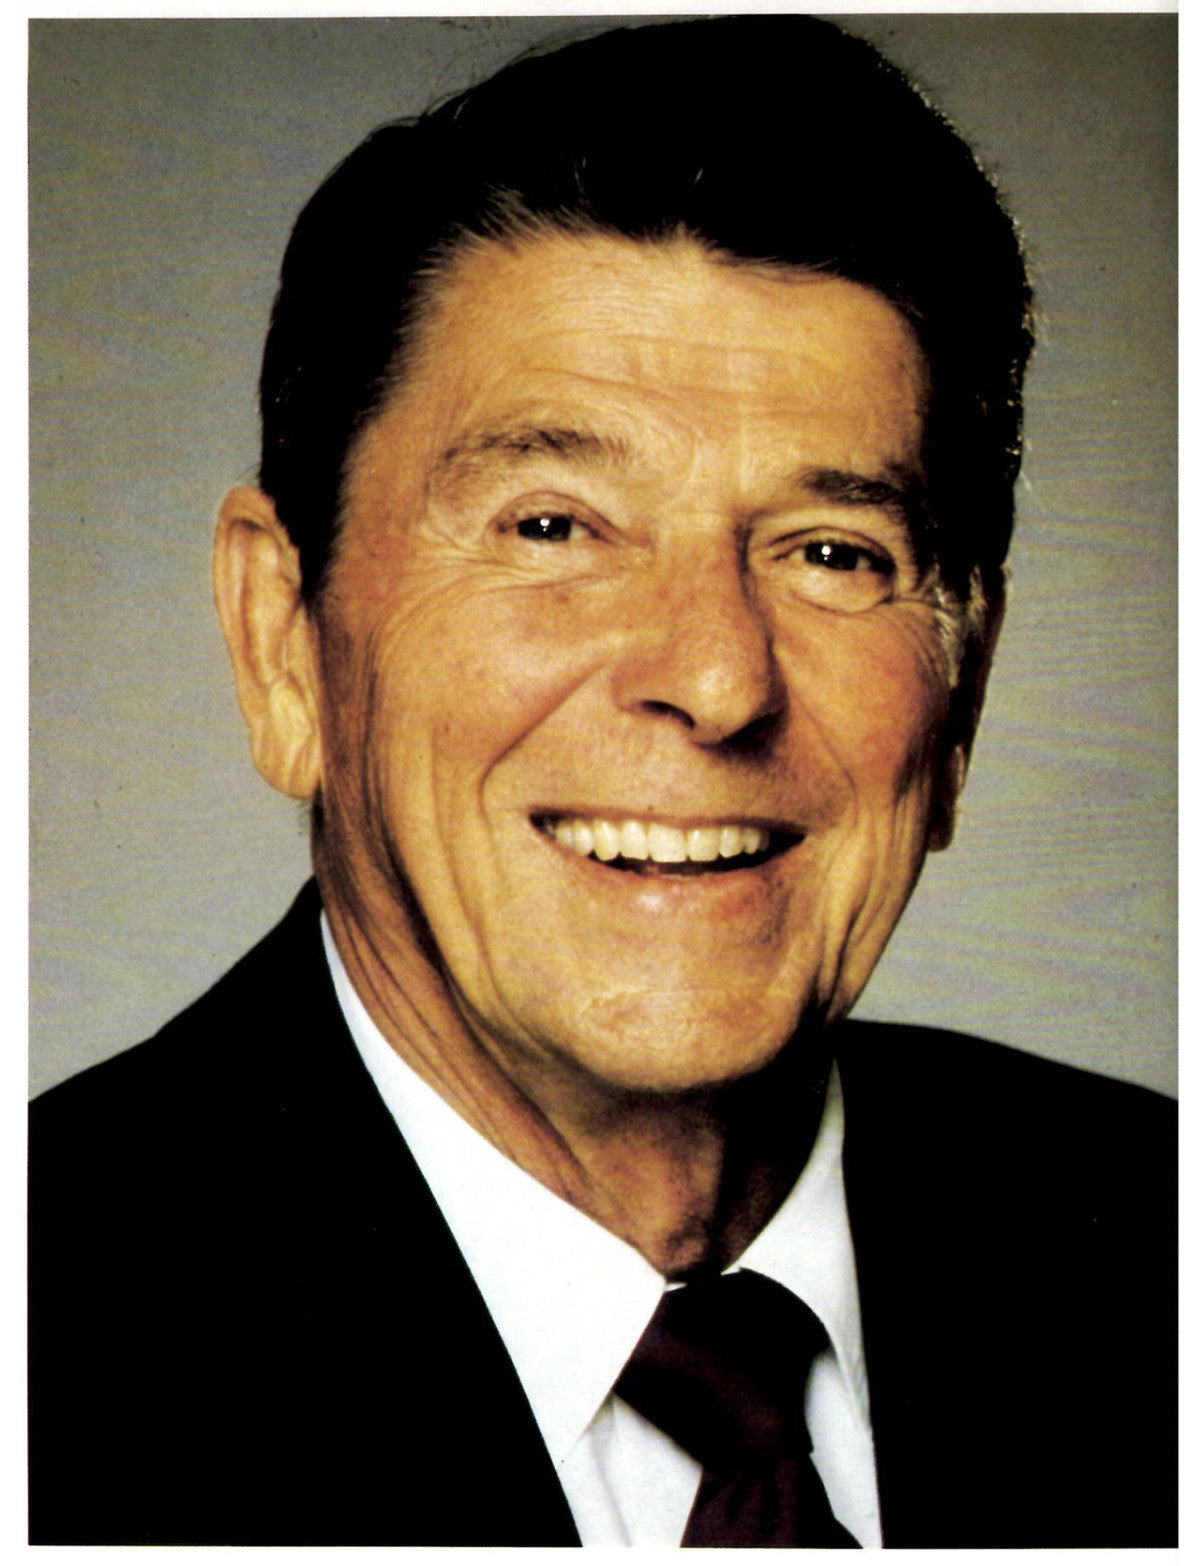 01 20 1981 Ronald Reagan Inauguration Book